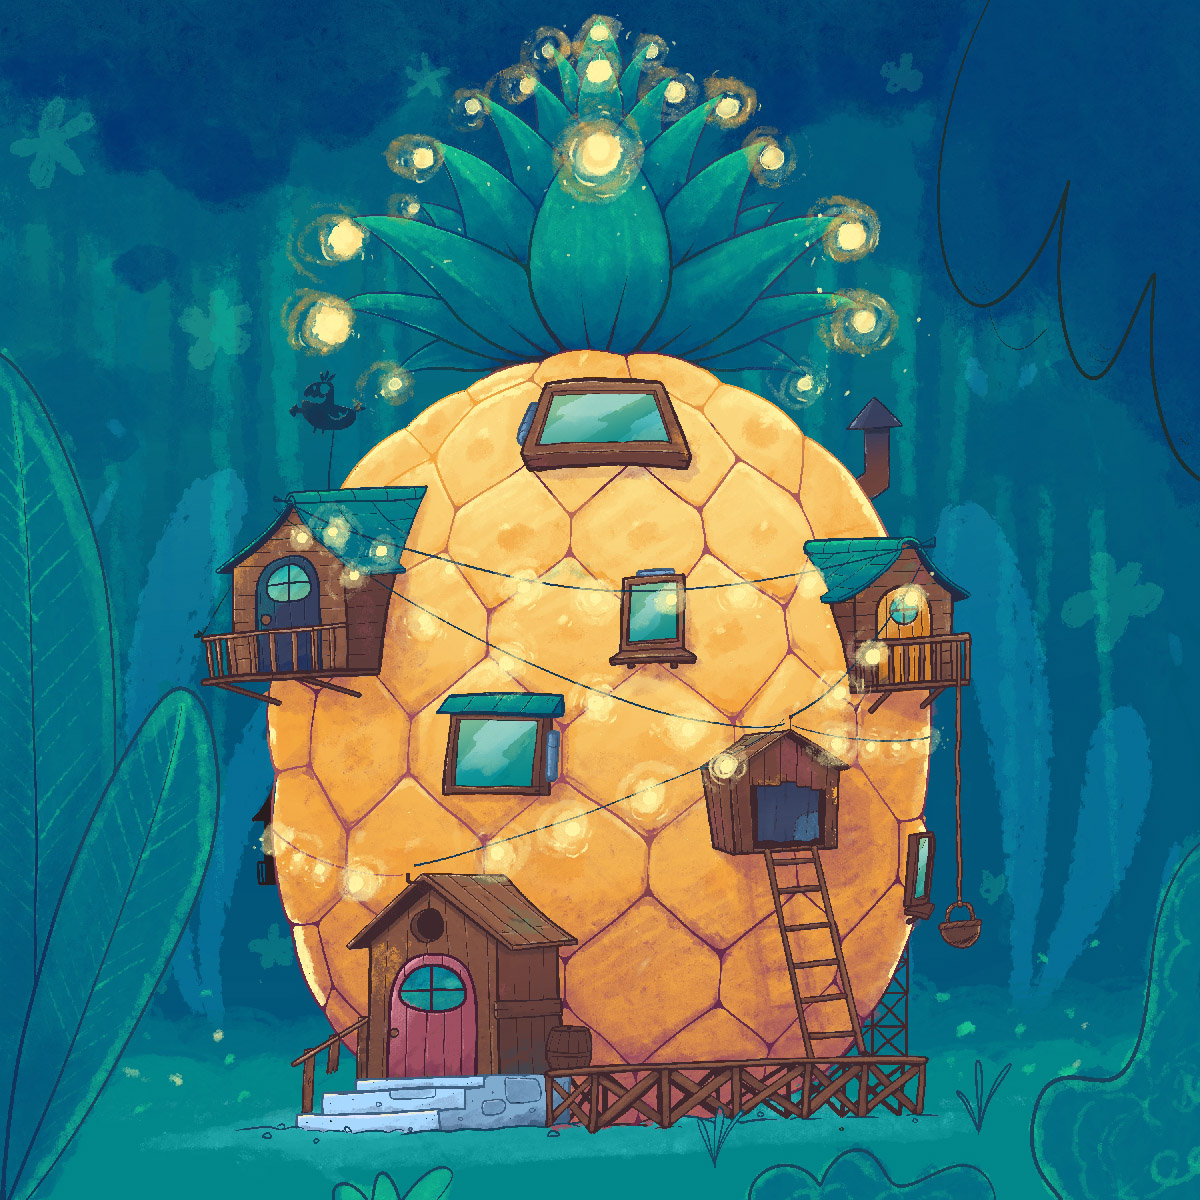 The ananas hut